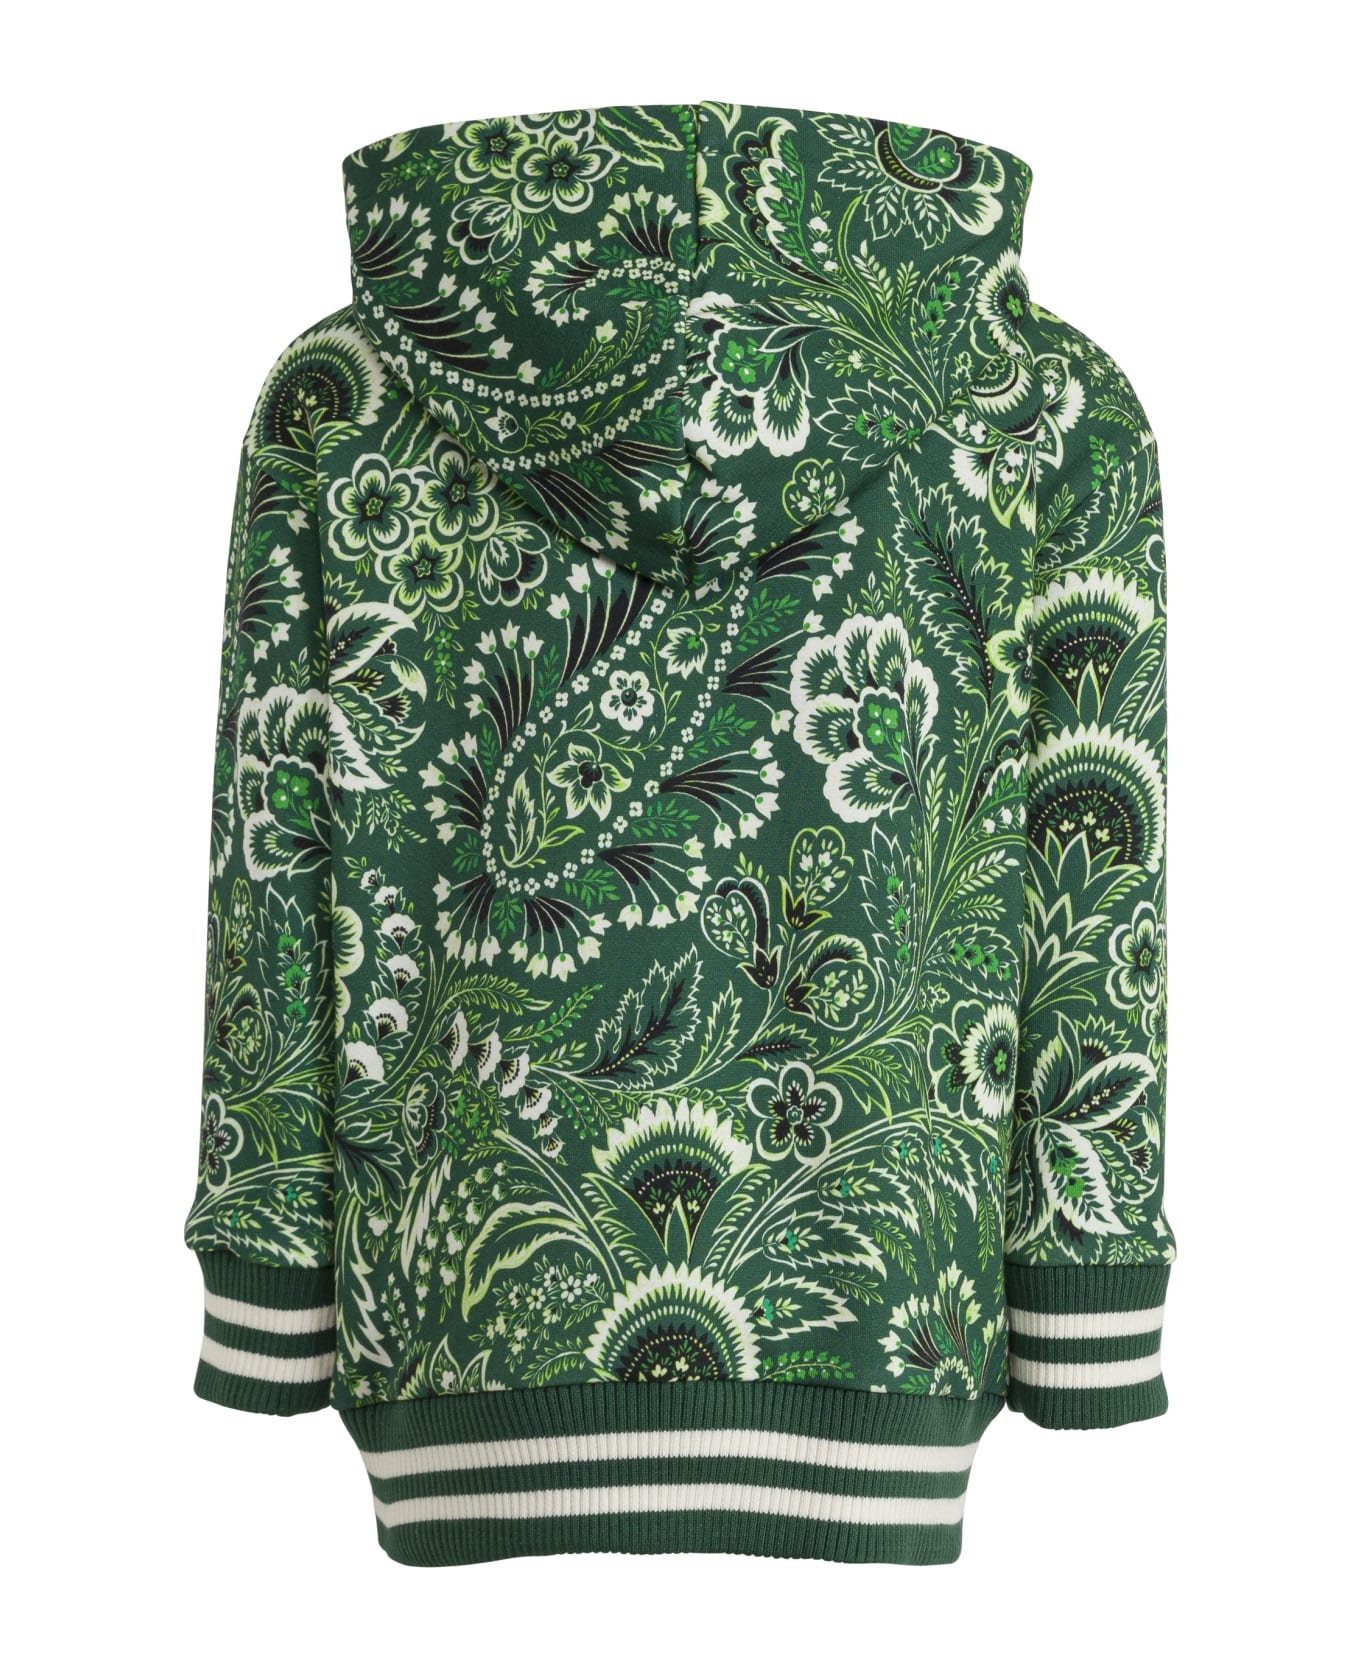 Etro Floral Sweatshirt - green/ivory